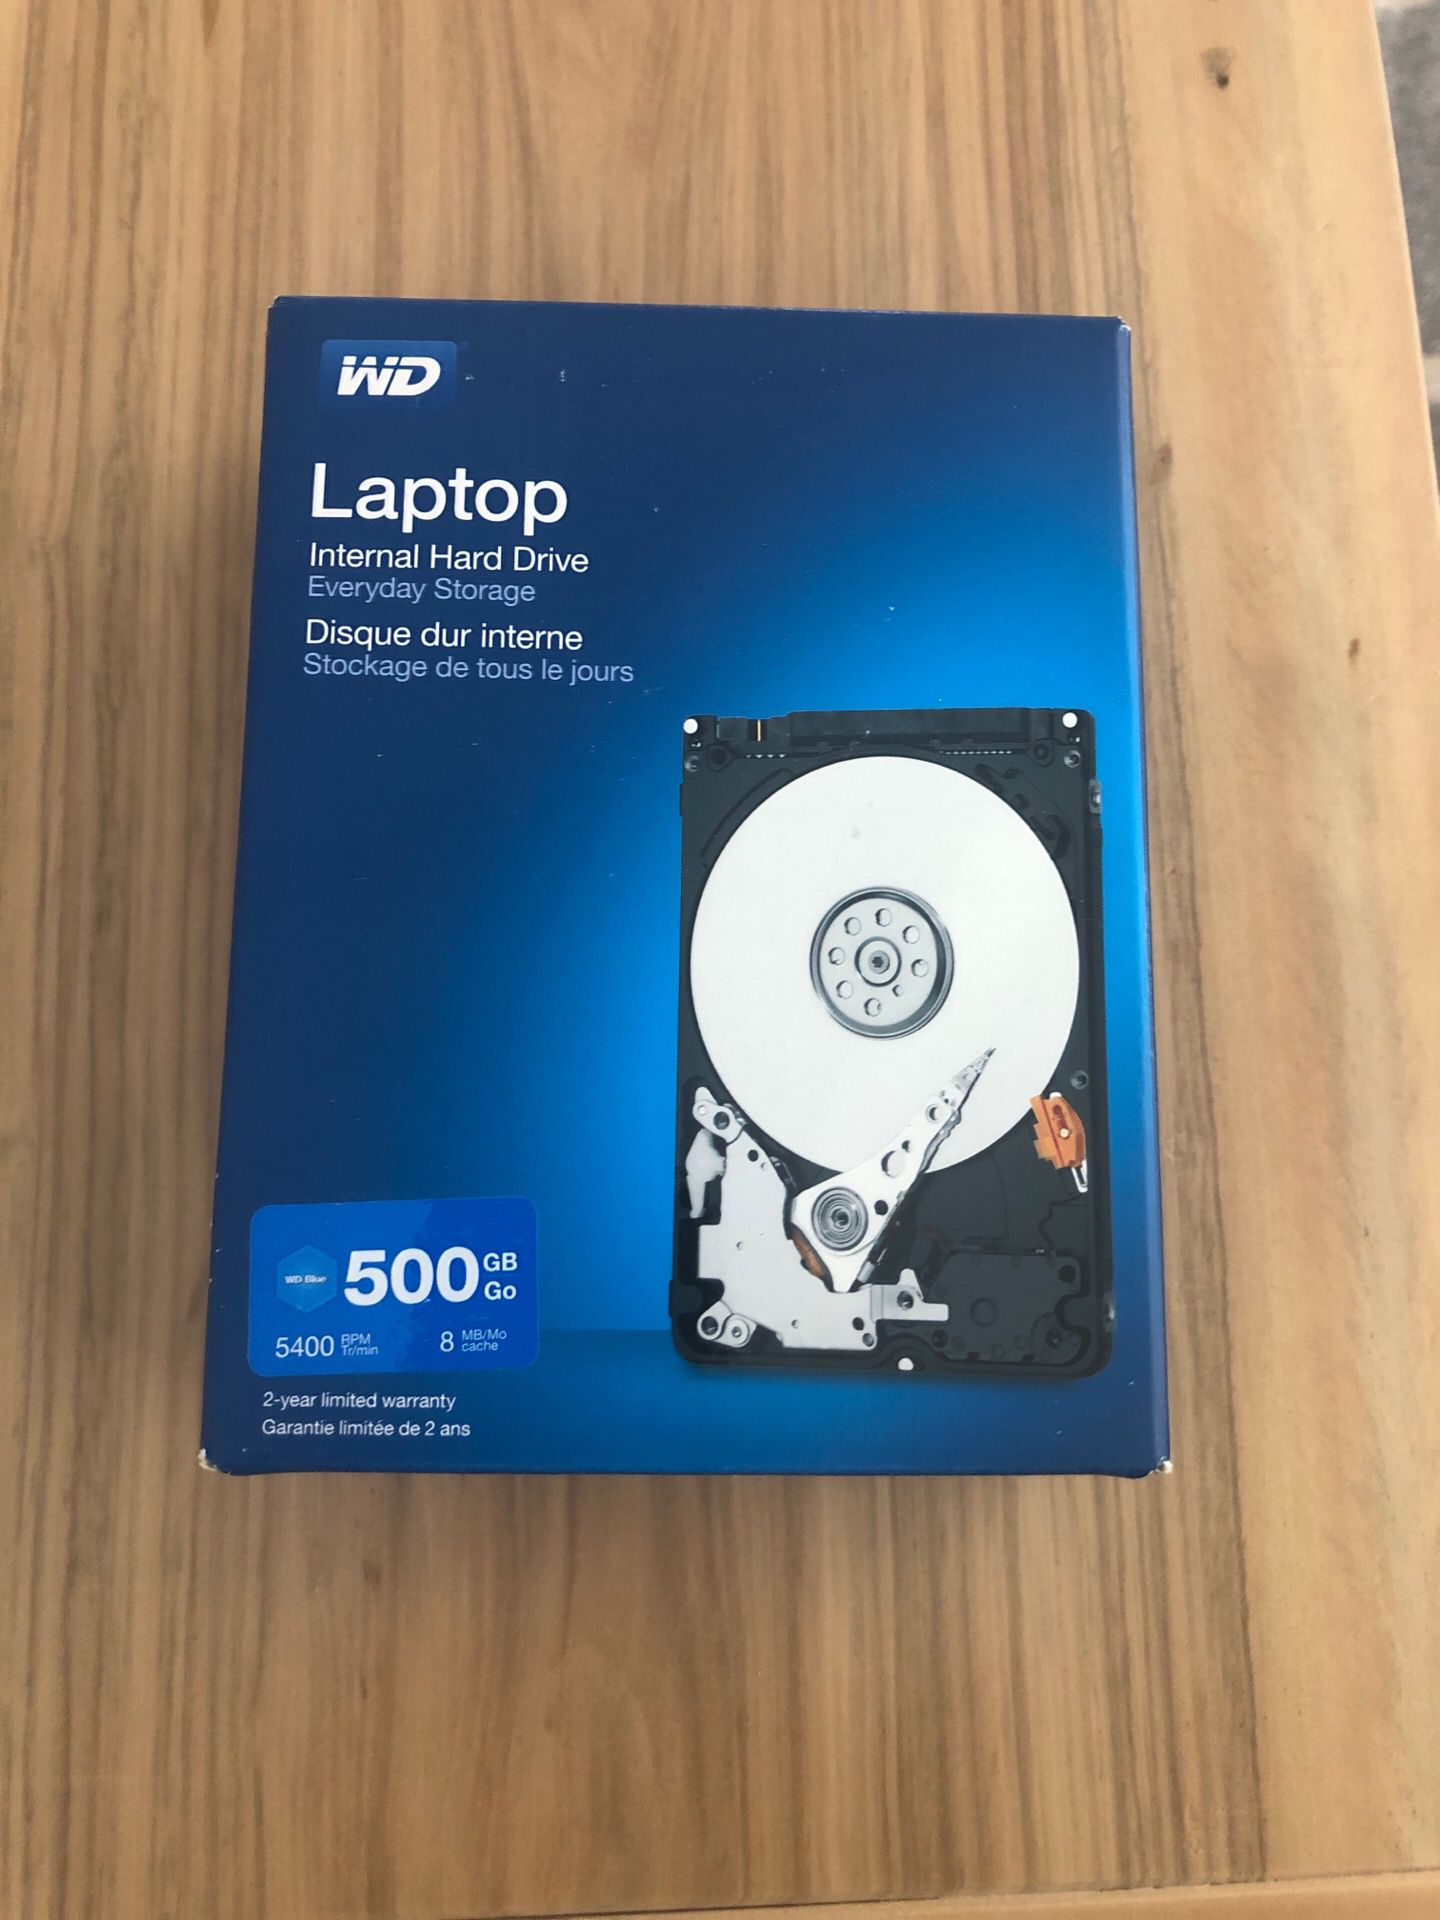 WD Laptop Internal Hard Drive, 500 GB